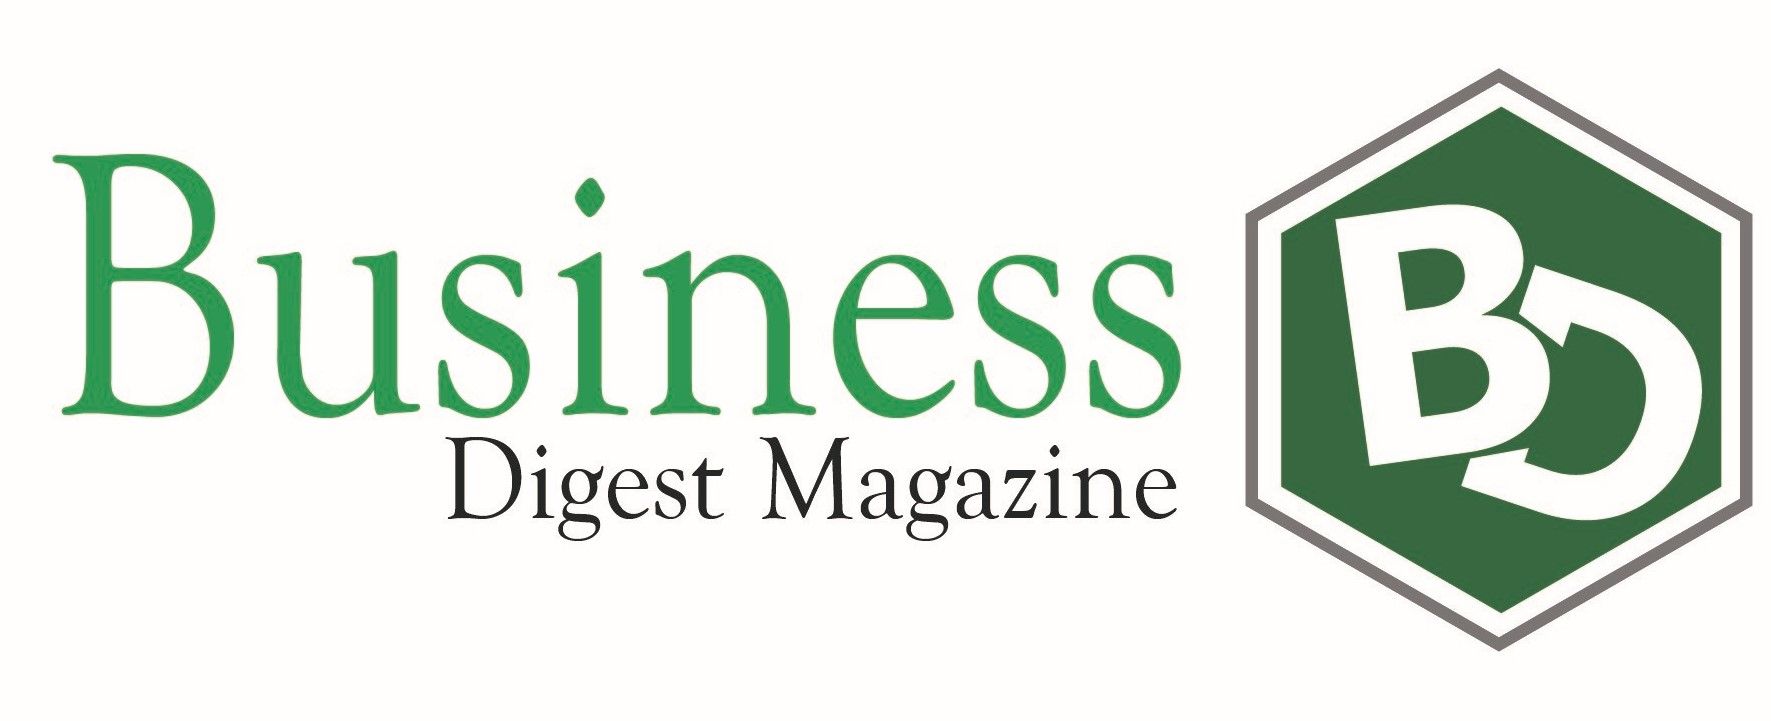 Business Digest Magazine Ltd